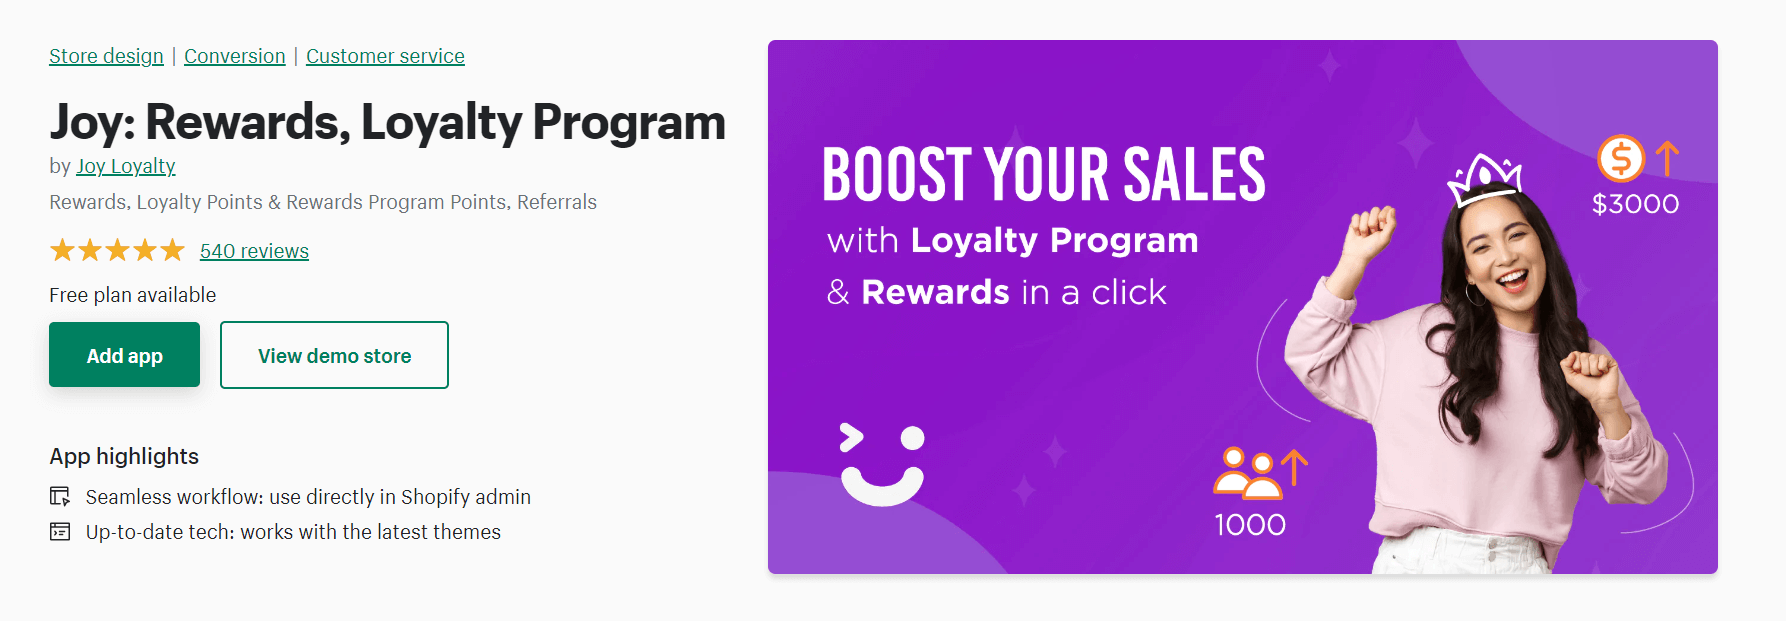 Joy customer loyalty program